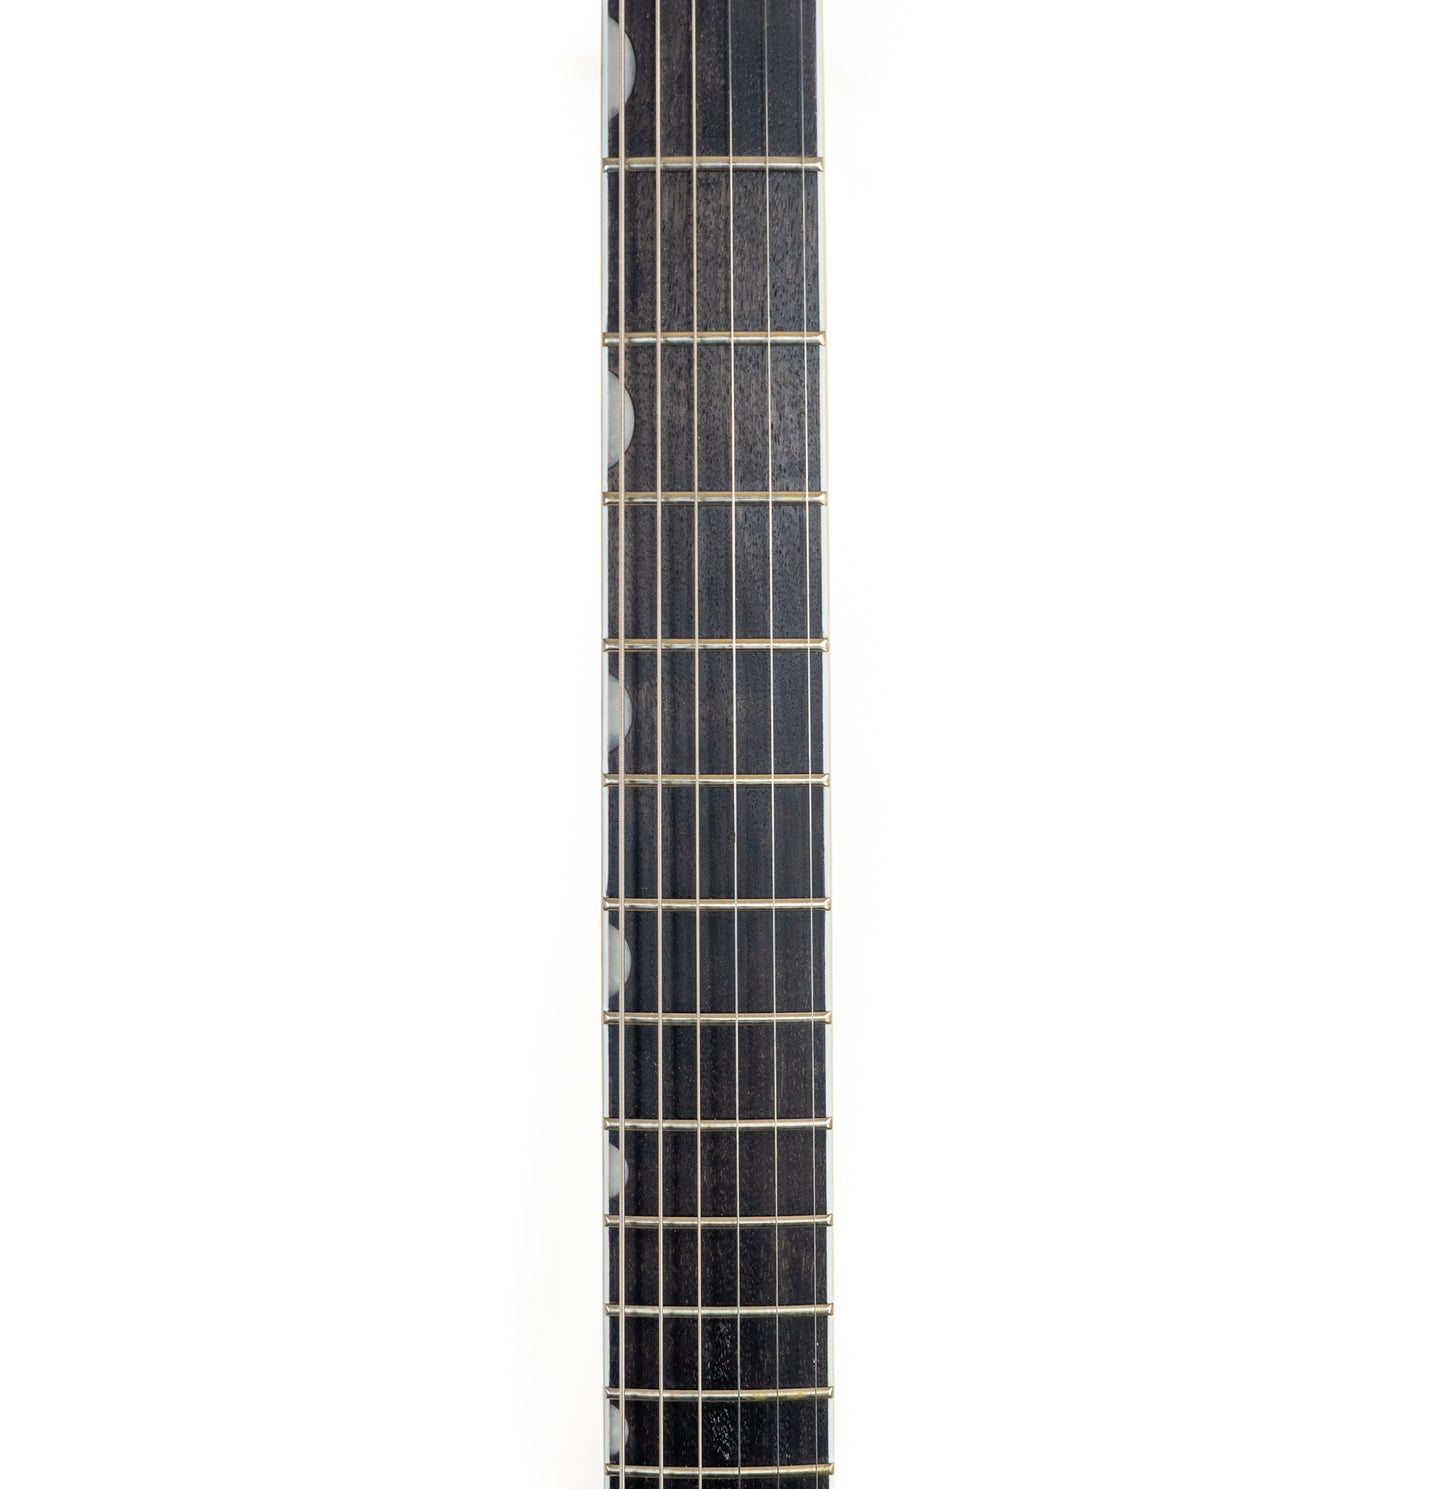 Gretsch G5230T EMTC JET gloss black electric guitar - pro repairs